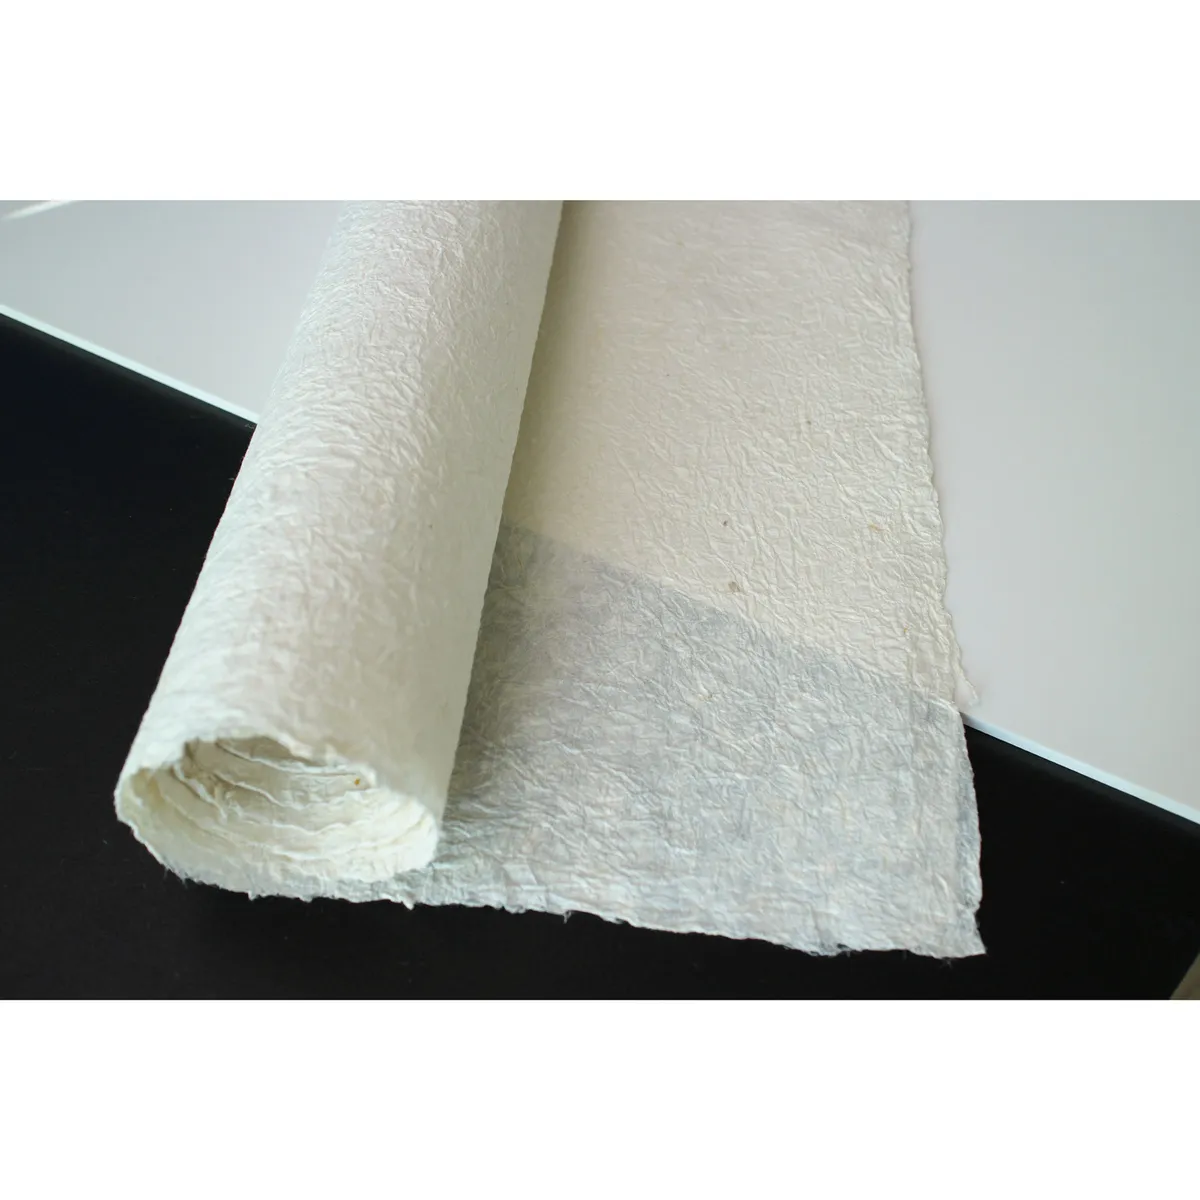 [5 Pcs] Korean Paper HanJi Joomchi Wrinkle Texture Deckle Edge 29.9 x 57.1